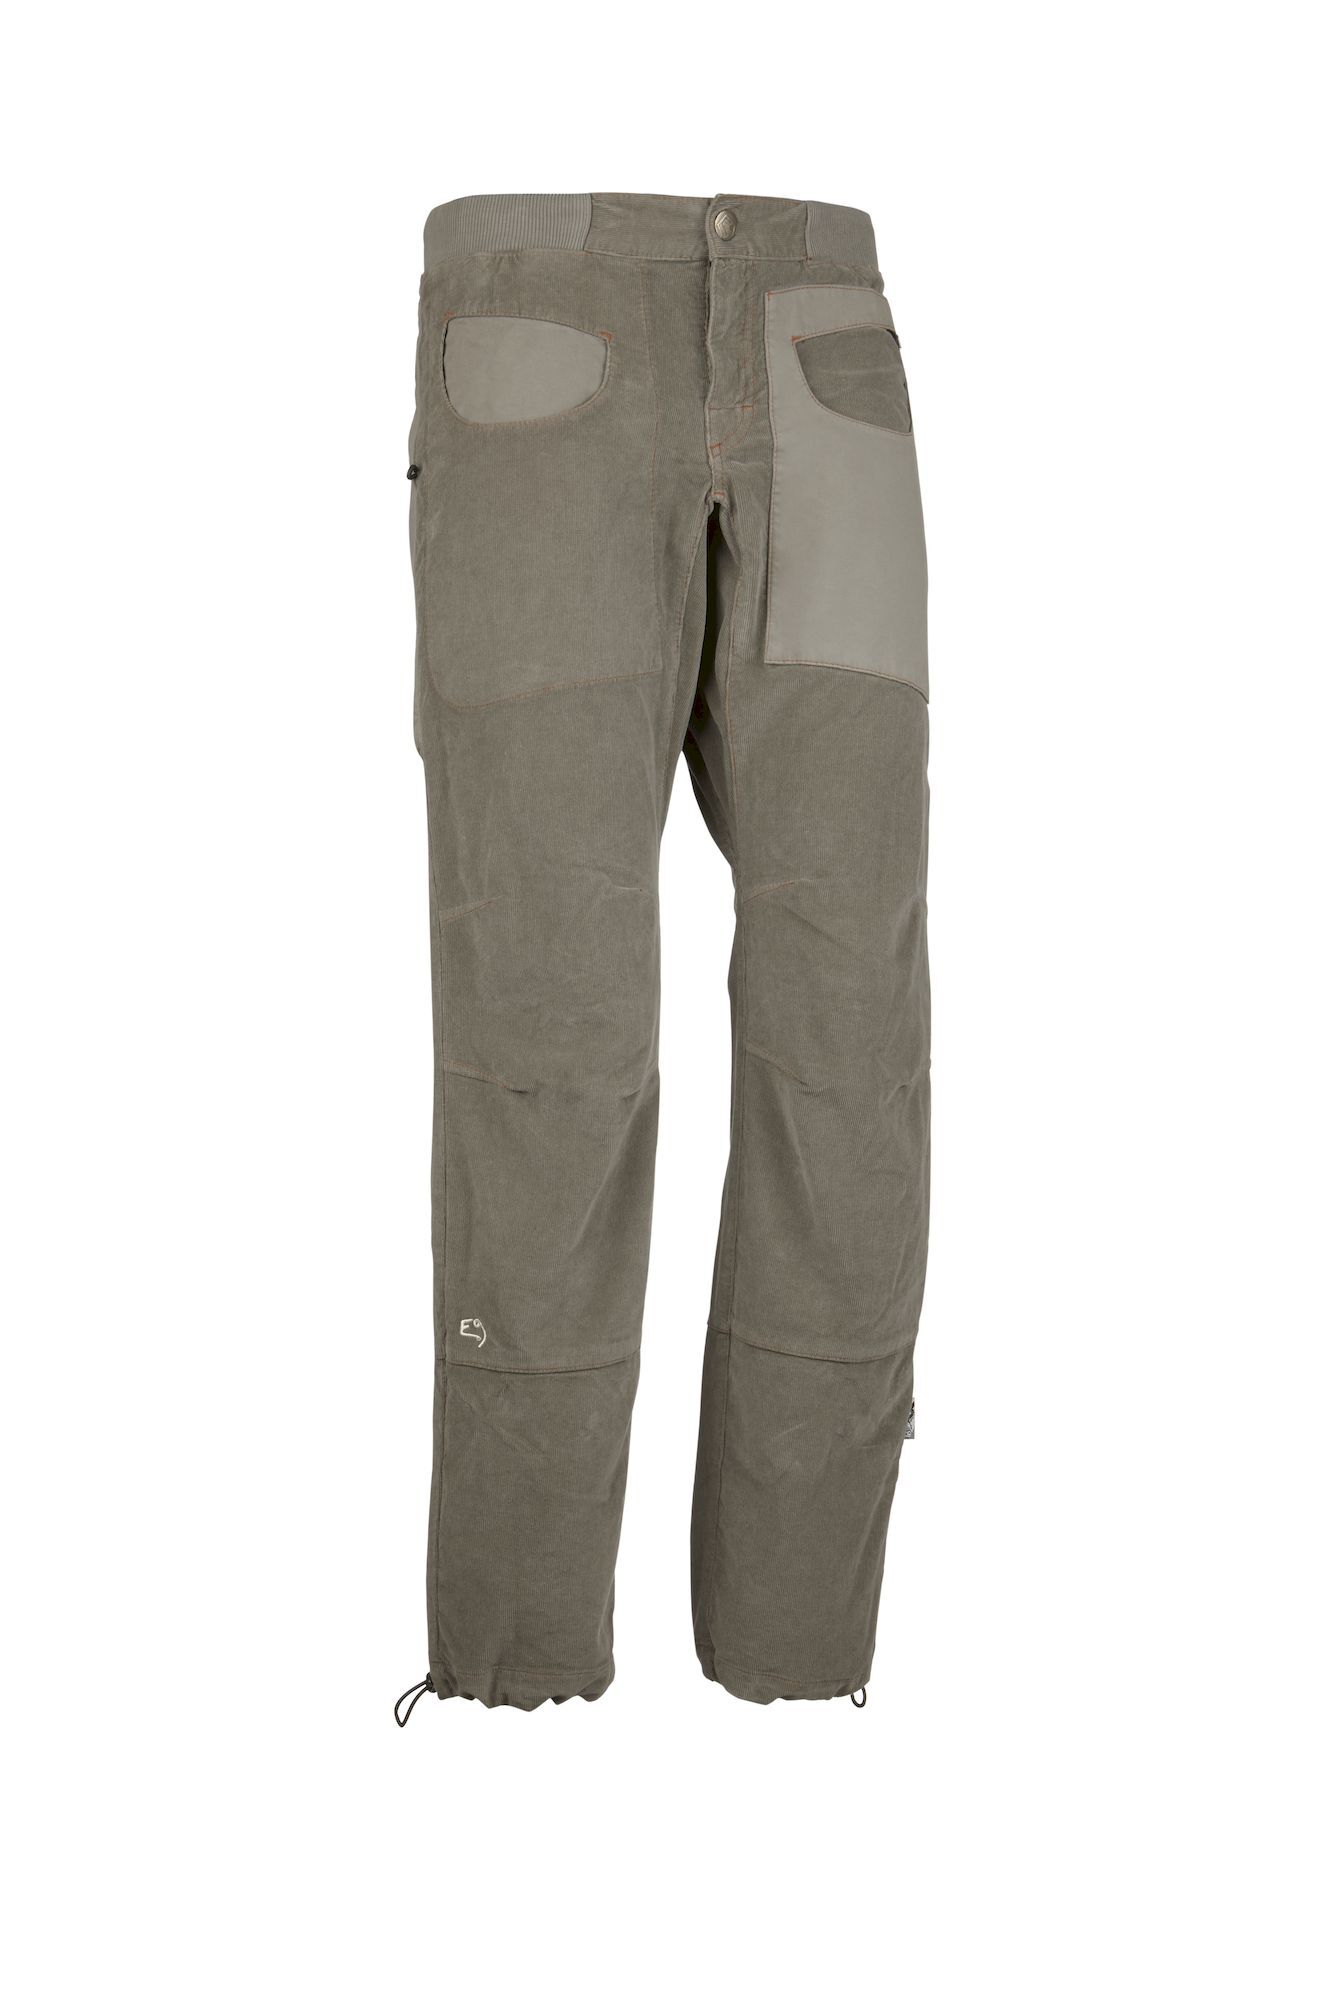 E9 N Blat1 VS - Climbing trousers - Men's | Hardloop